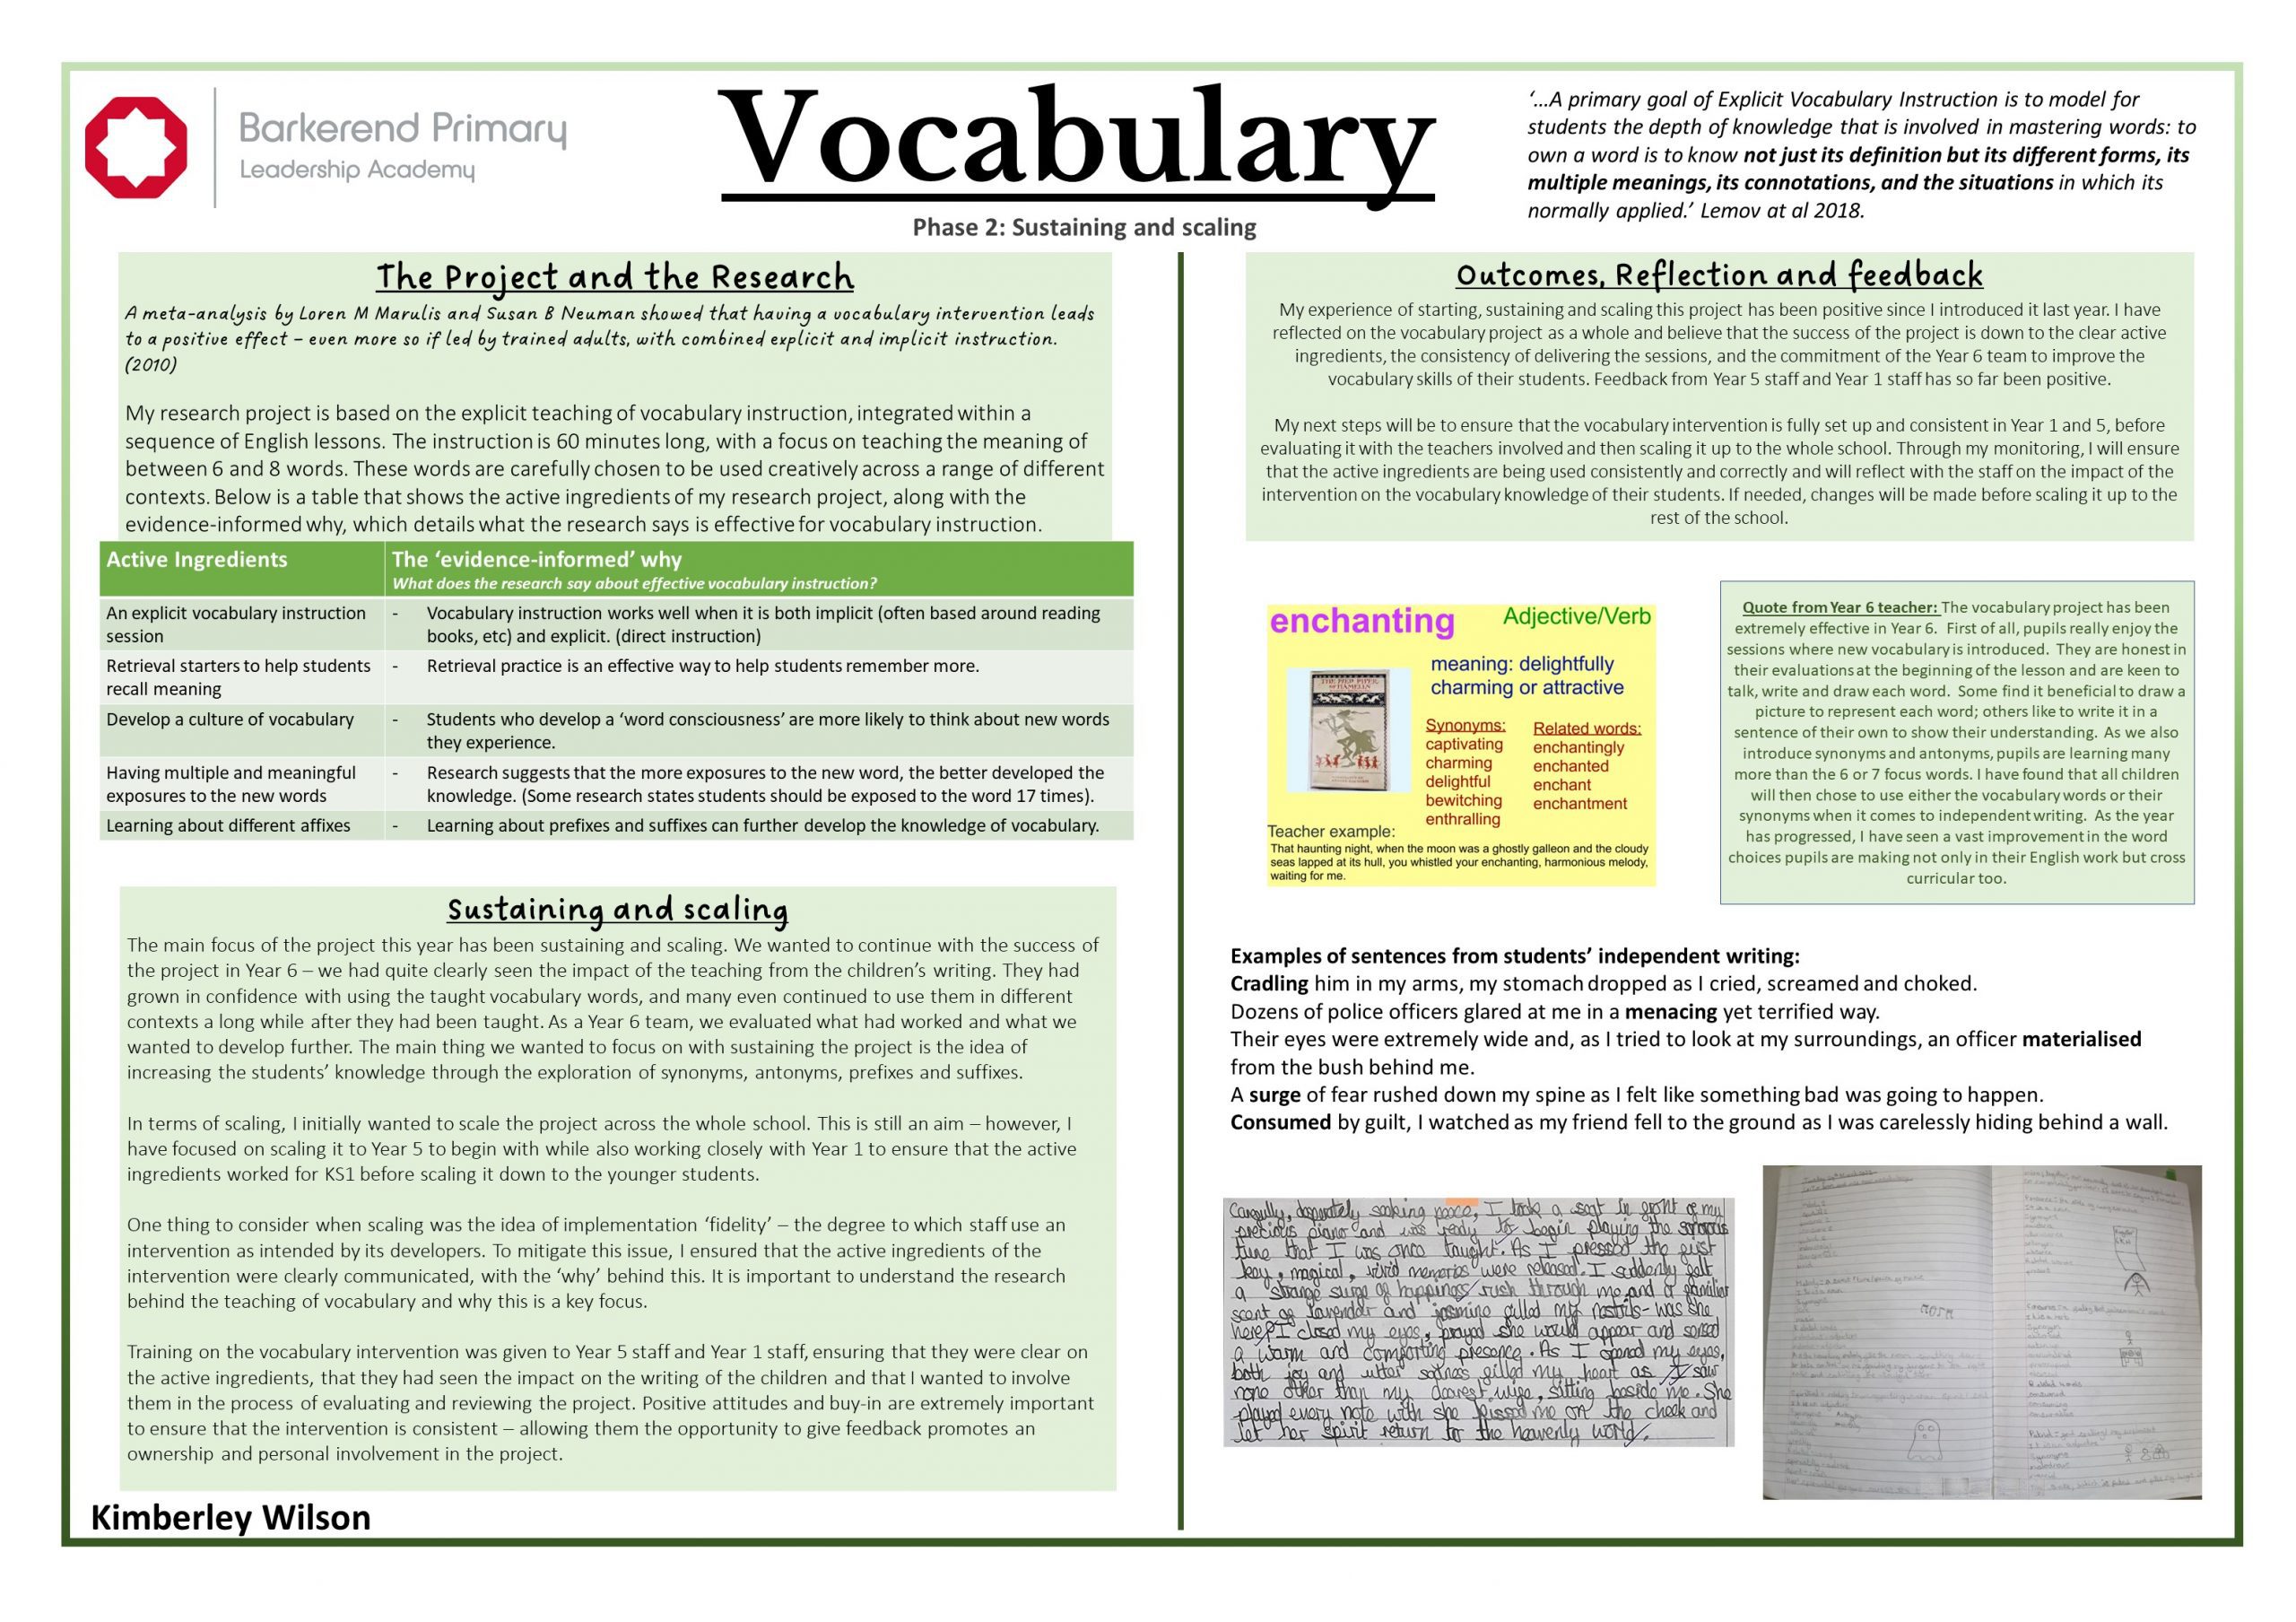 Kimberley_Wilson_Barkerend_Primary_Leadership_Academy_Vocabulary